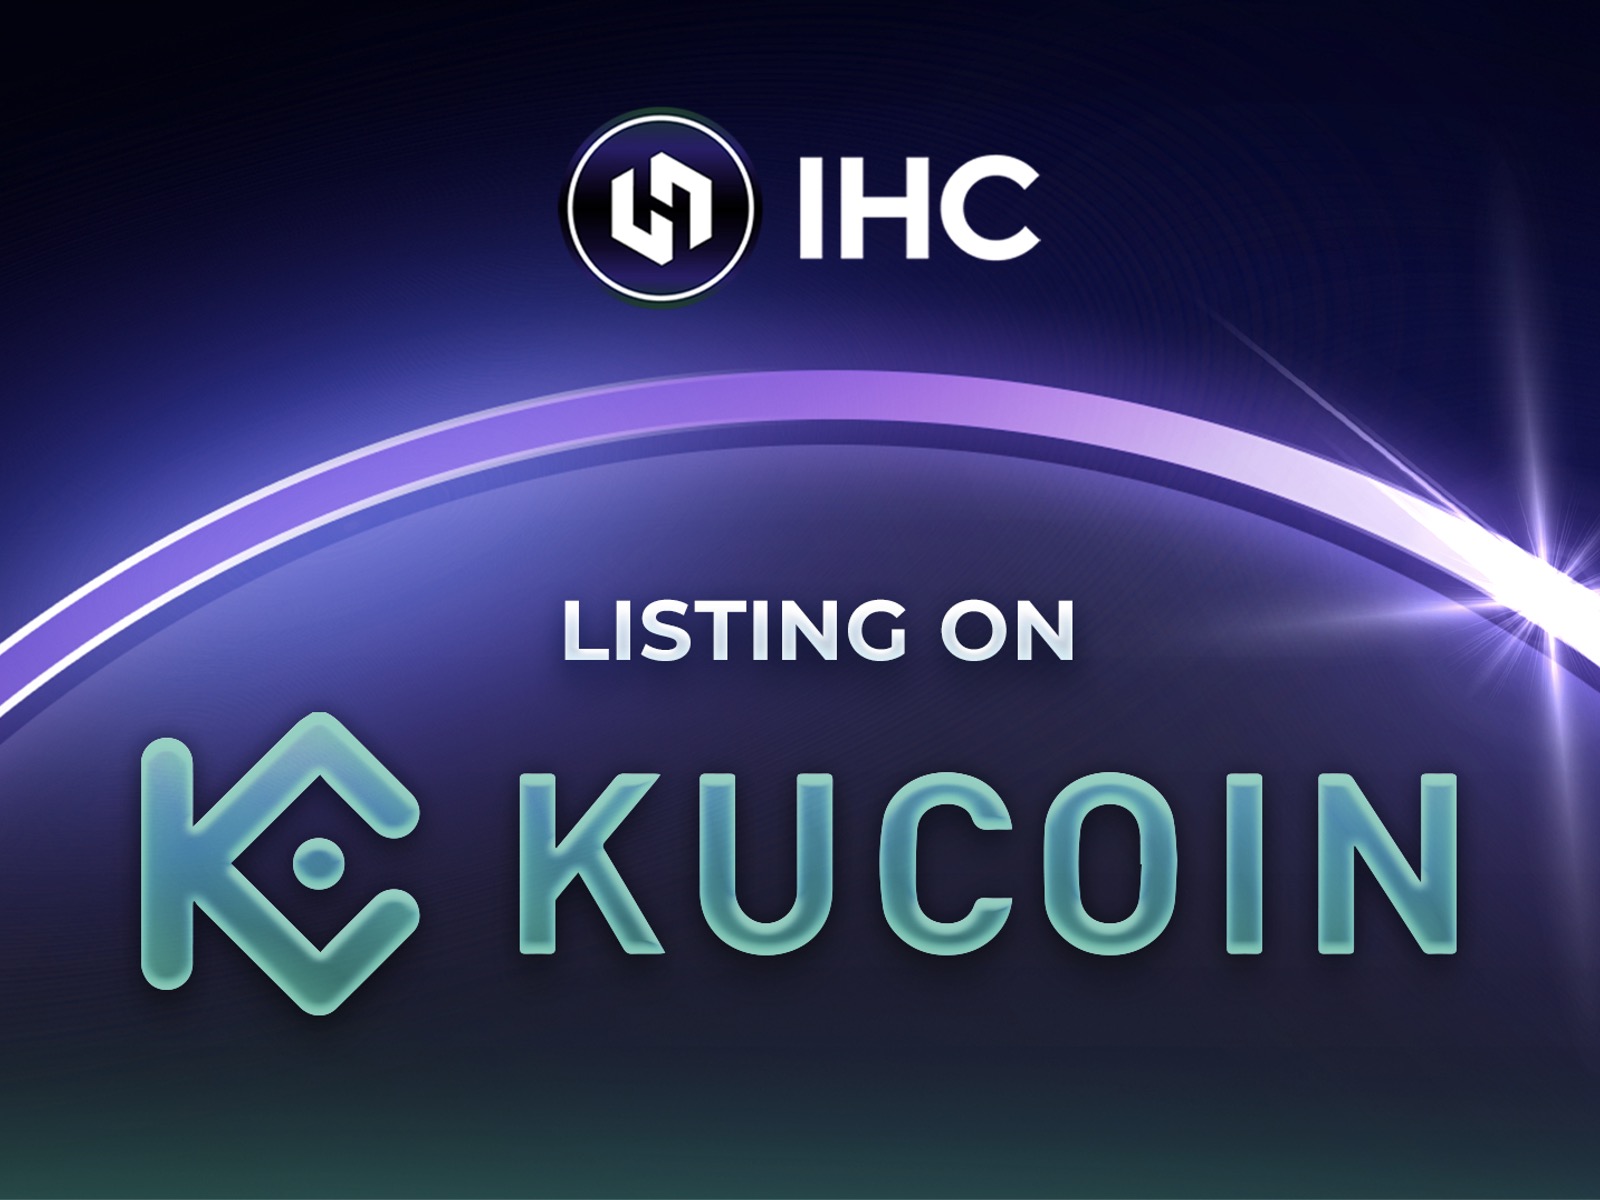 IHC’s KuCoin Listing Celebrated in Mongolia